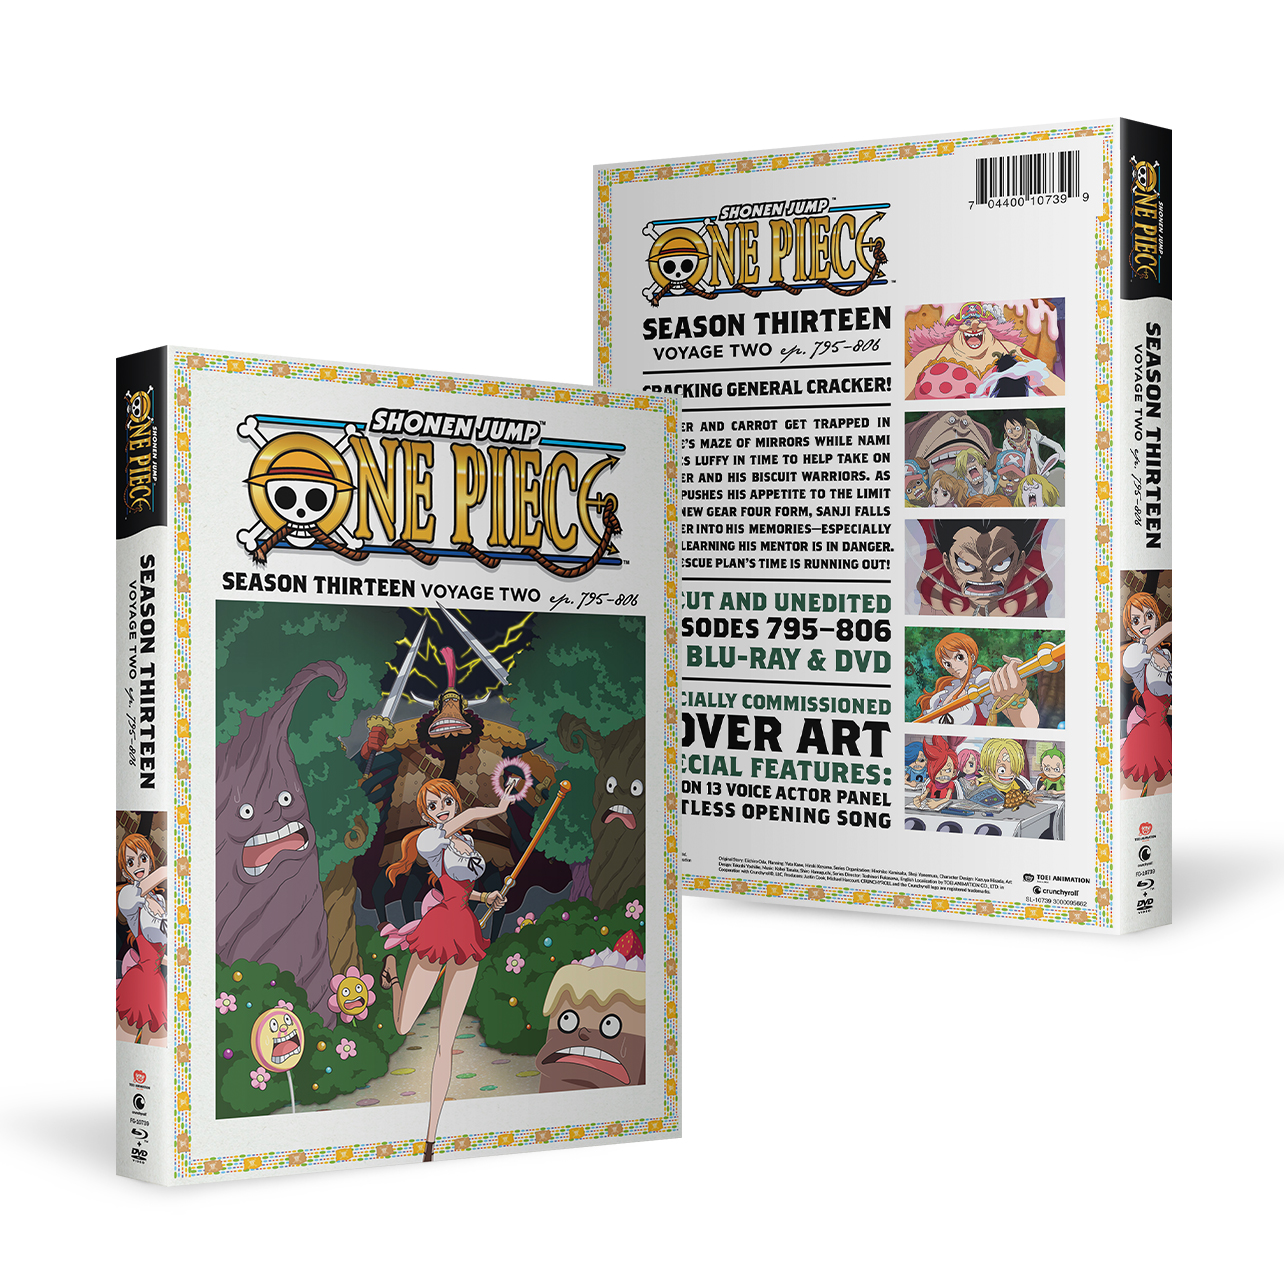 One Piece - Season 13 Voyage 3 - Blu-ray + DVD image count 0